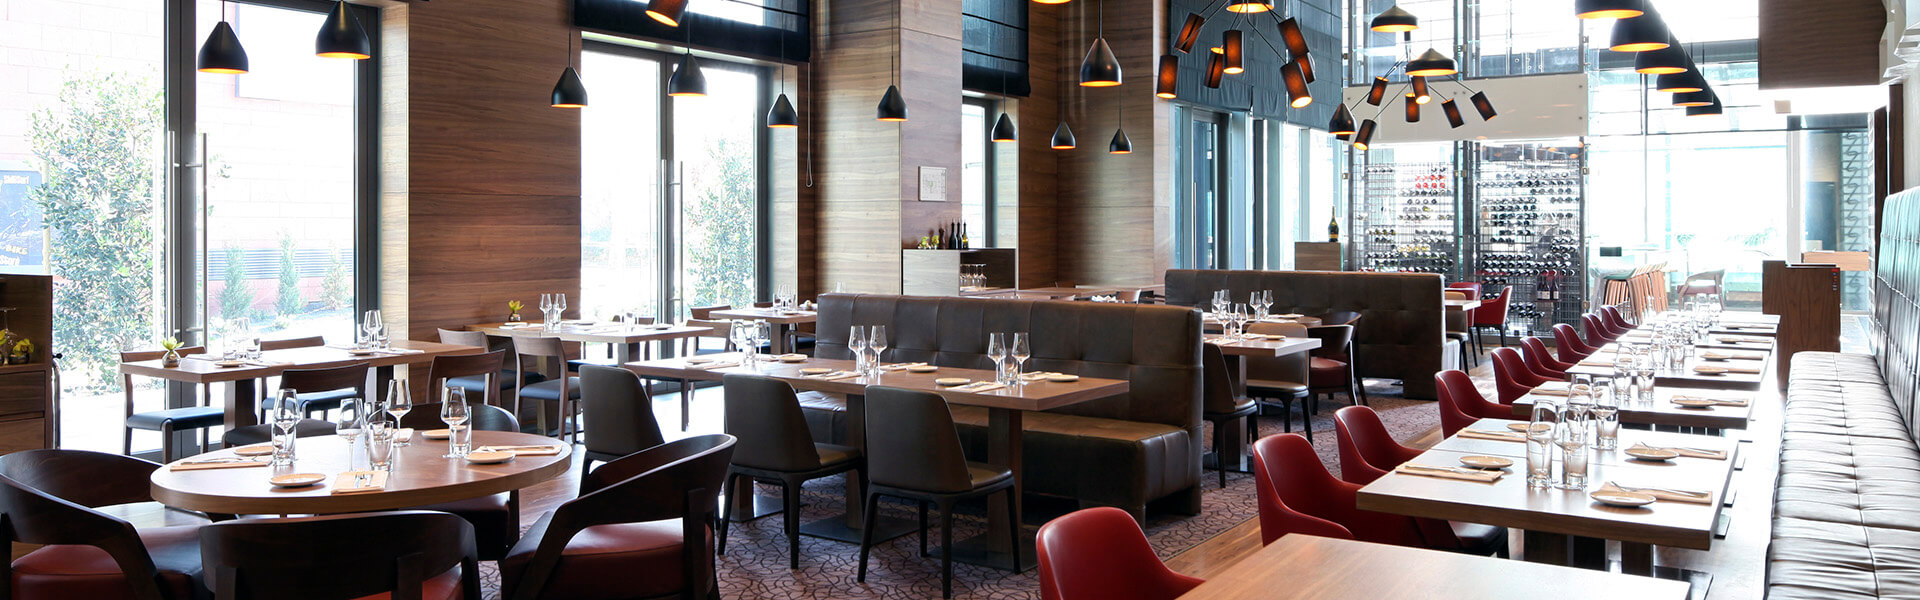 Rumpke Hospitality Waste Solutions Inside Hotel Restaurant